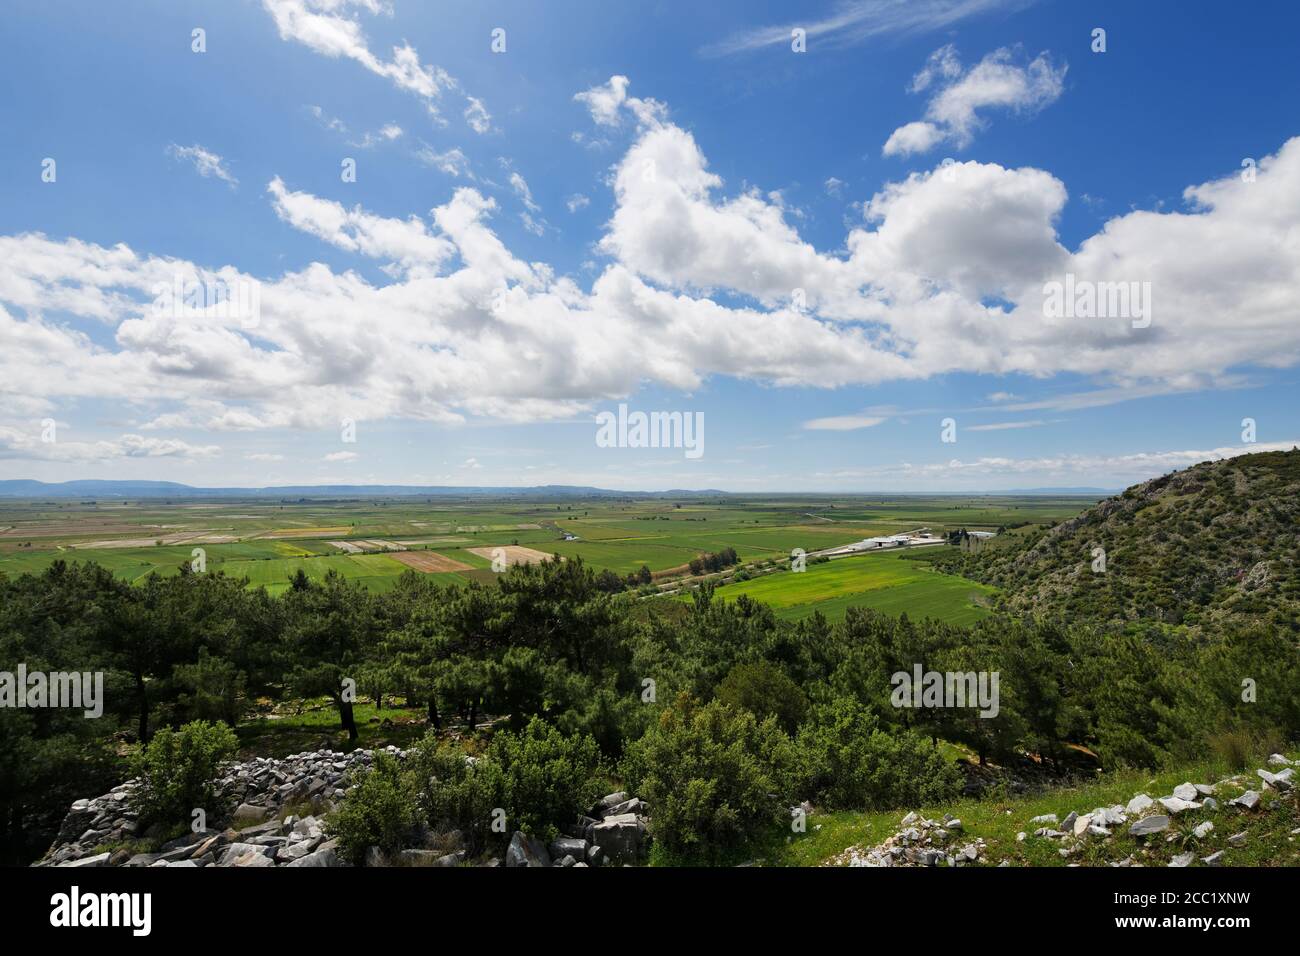 La Turchia, vista di Buyuk Menderes River Foto Stock